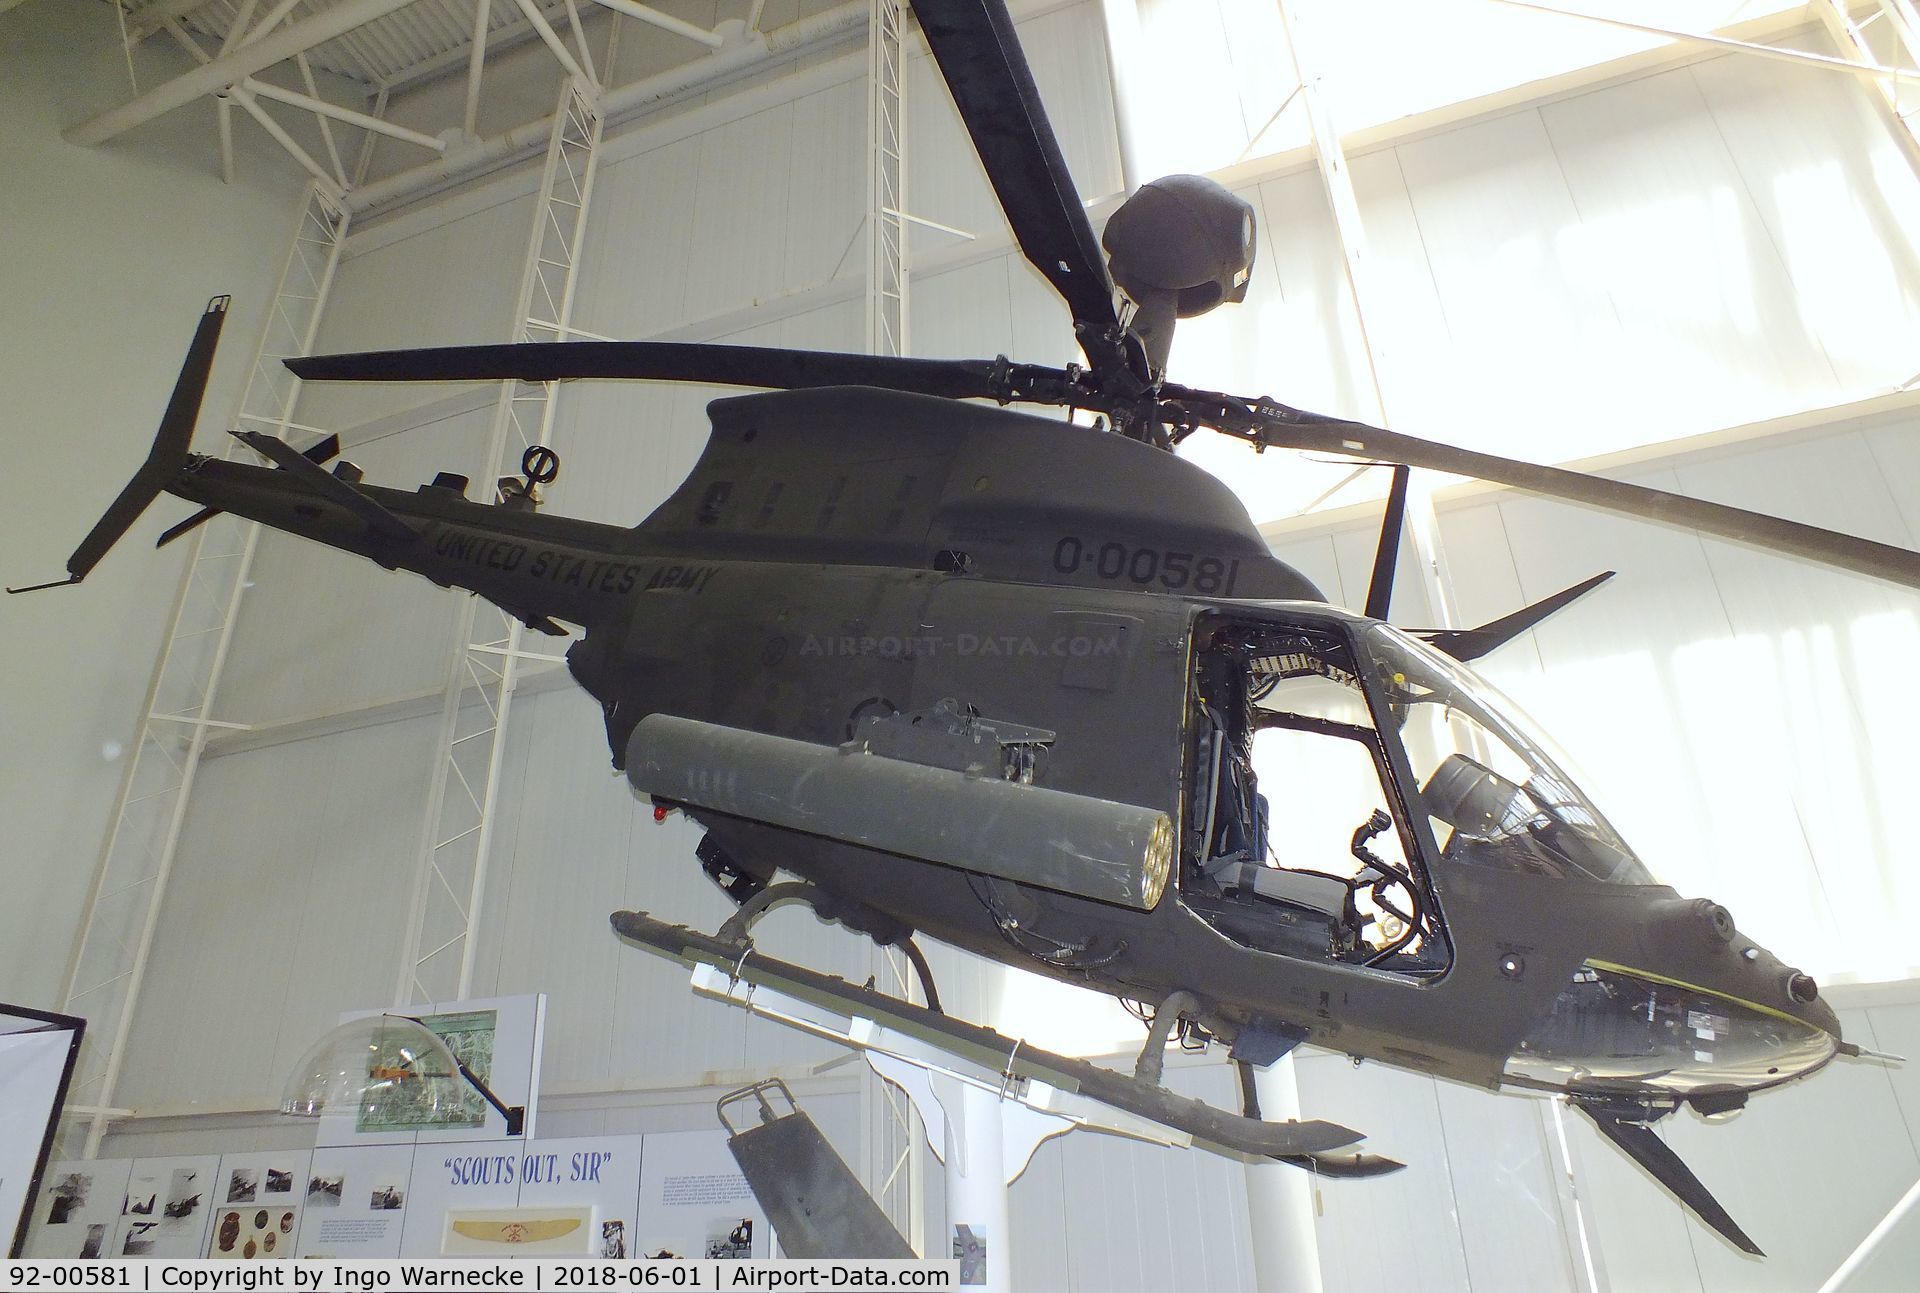 92-00581, 1992 Bell OH-58D(I) Kiowa Warrior C/N 43295, Bell OH-58D(I) Kiowa Warrior at the US Army Aviation Museum, Ft. Rucker